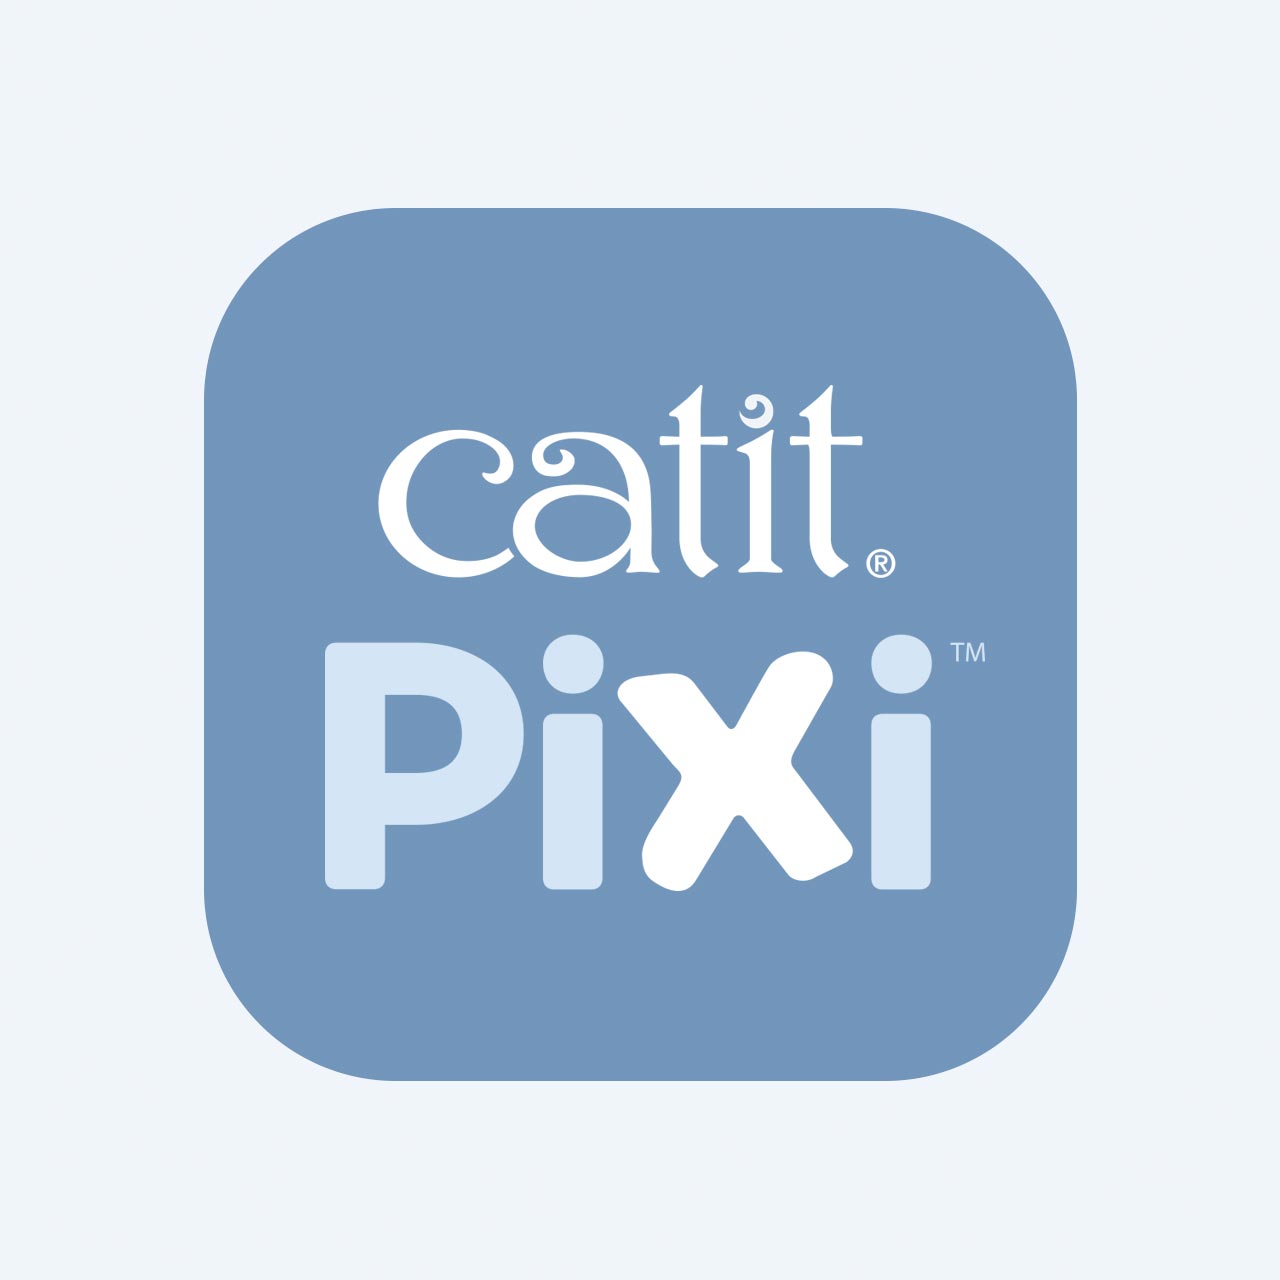 PIXI app logo